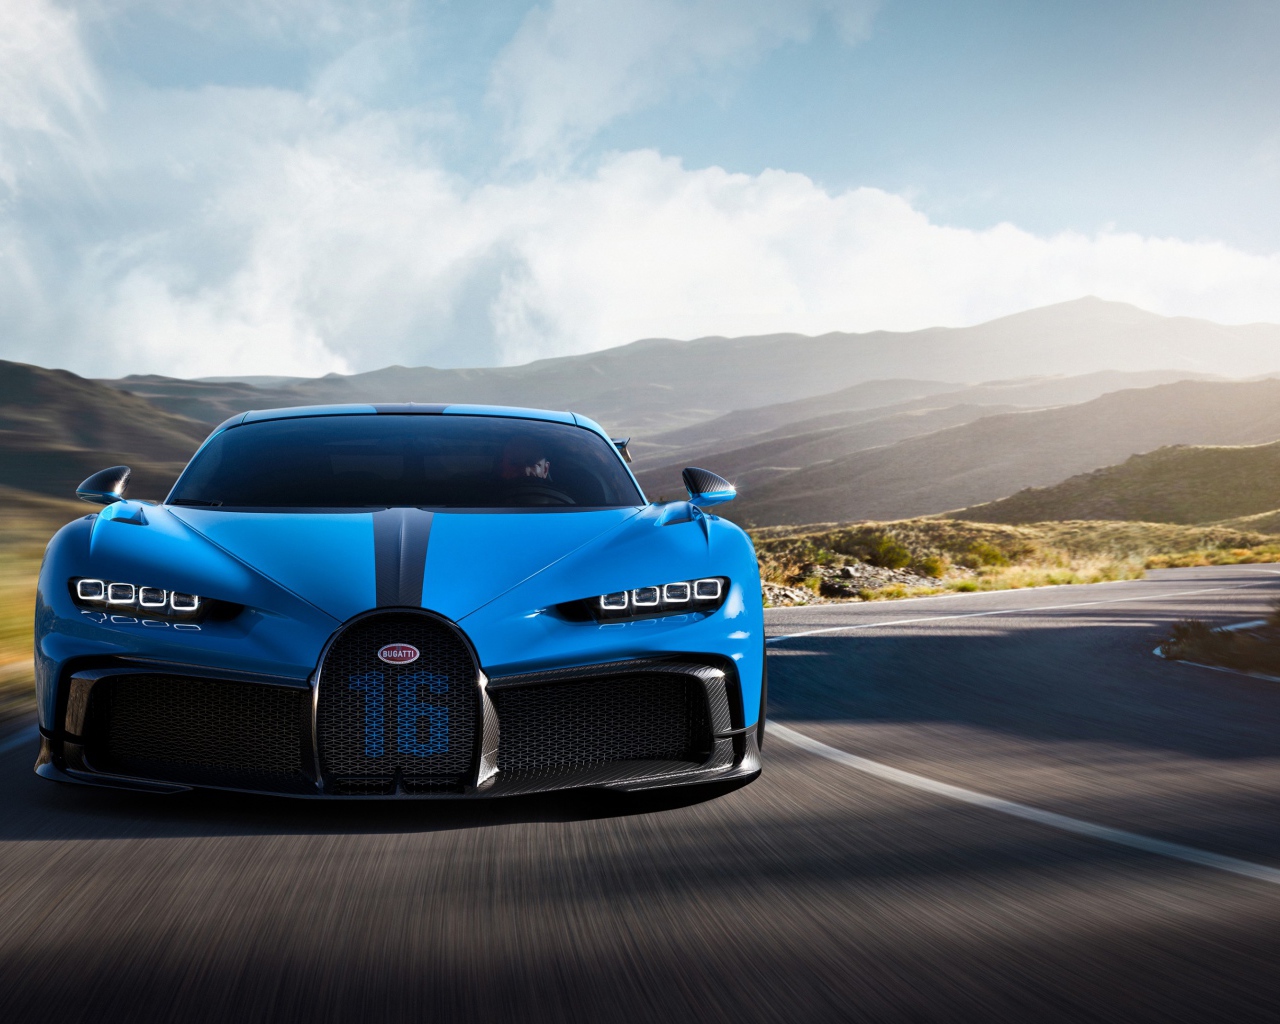 Синий автомобиль Bugatti Chiron Pur Sport 2020 года на трассе в горах 